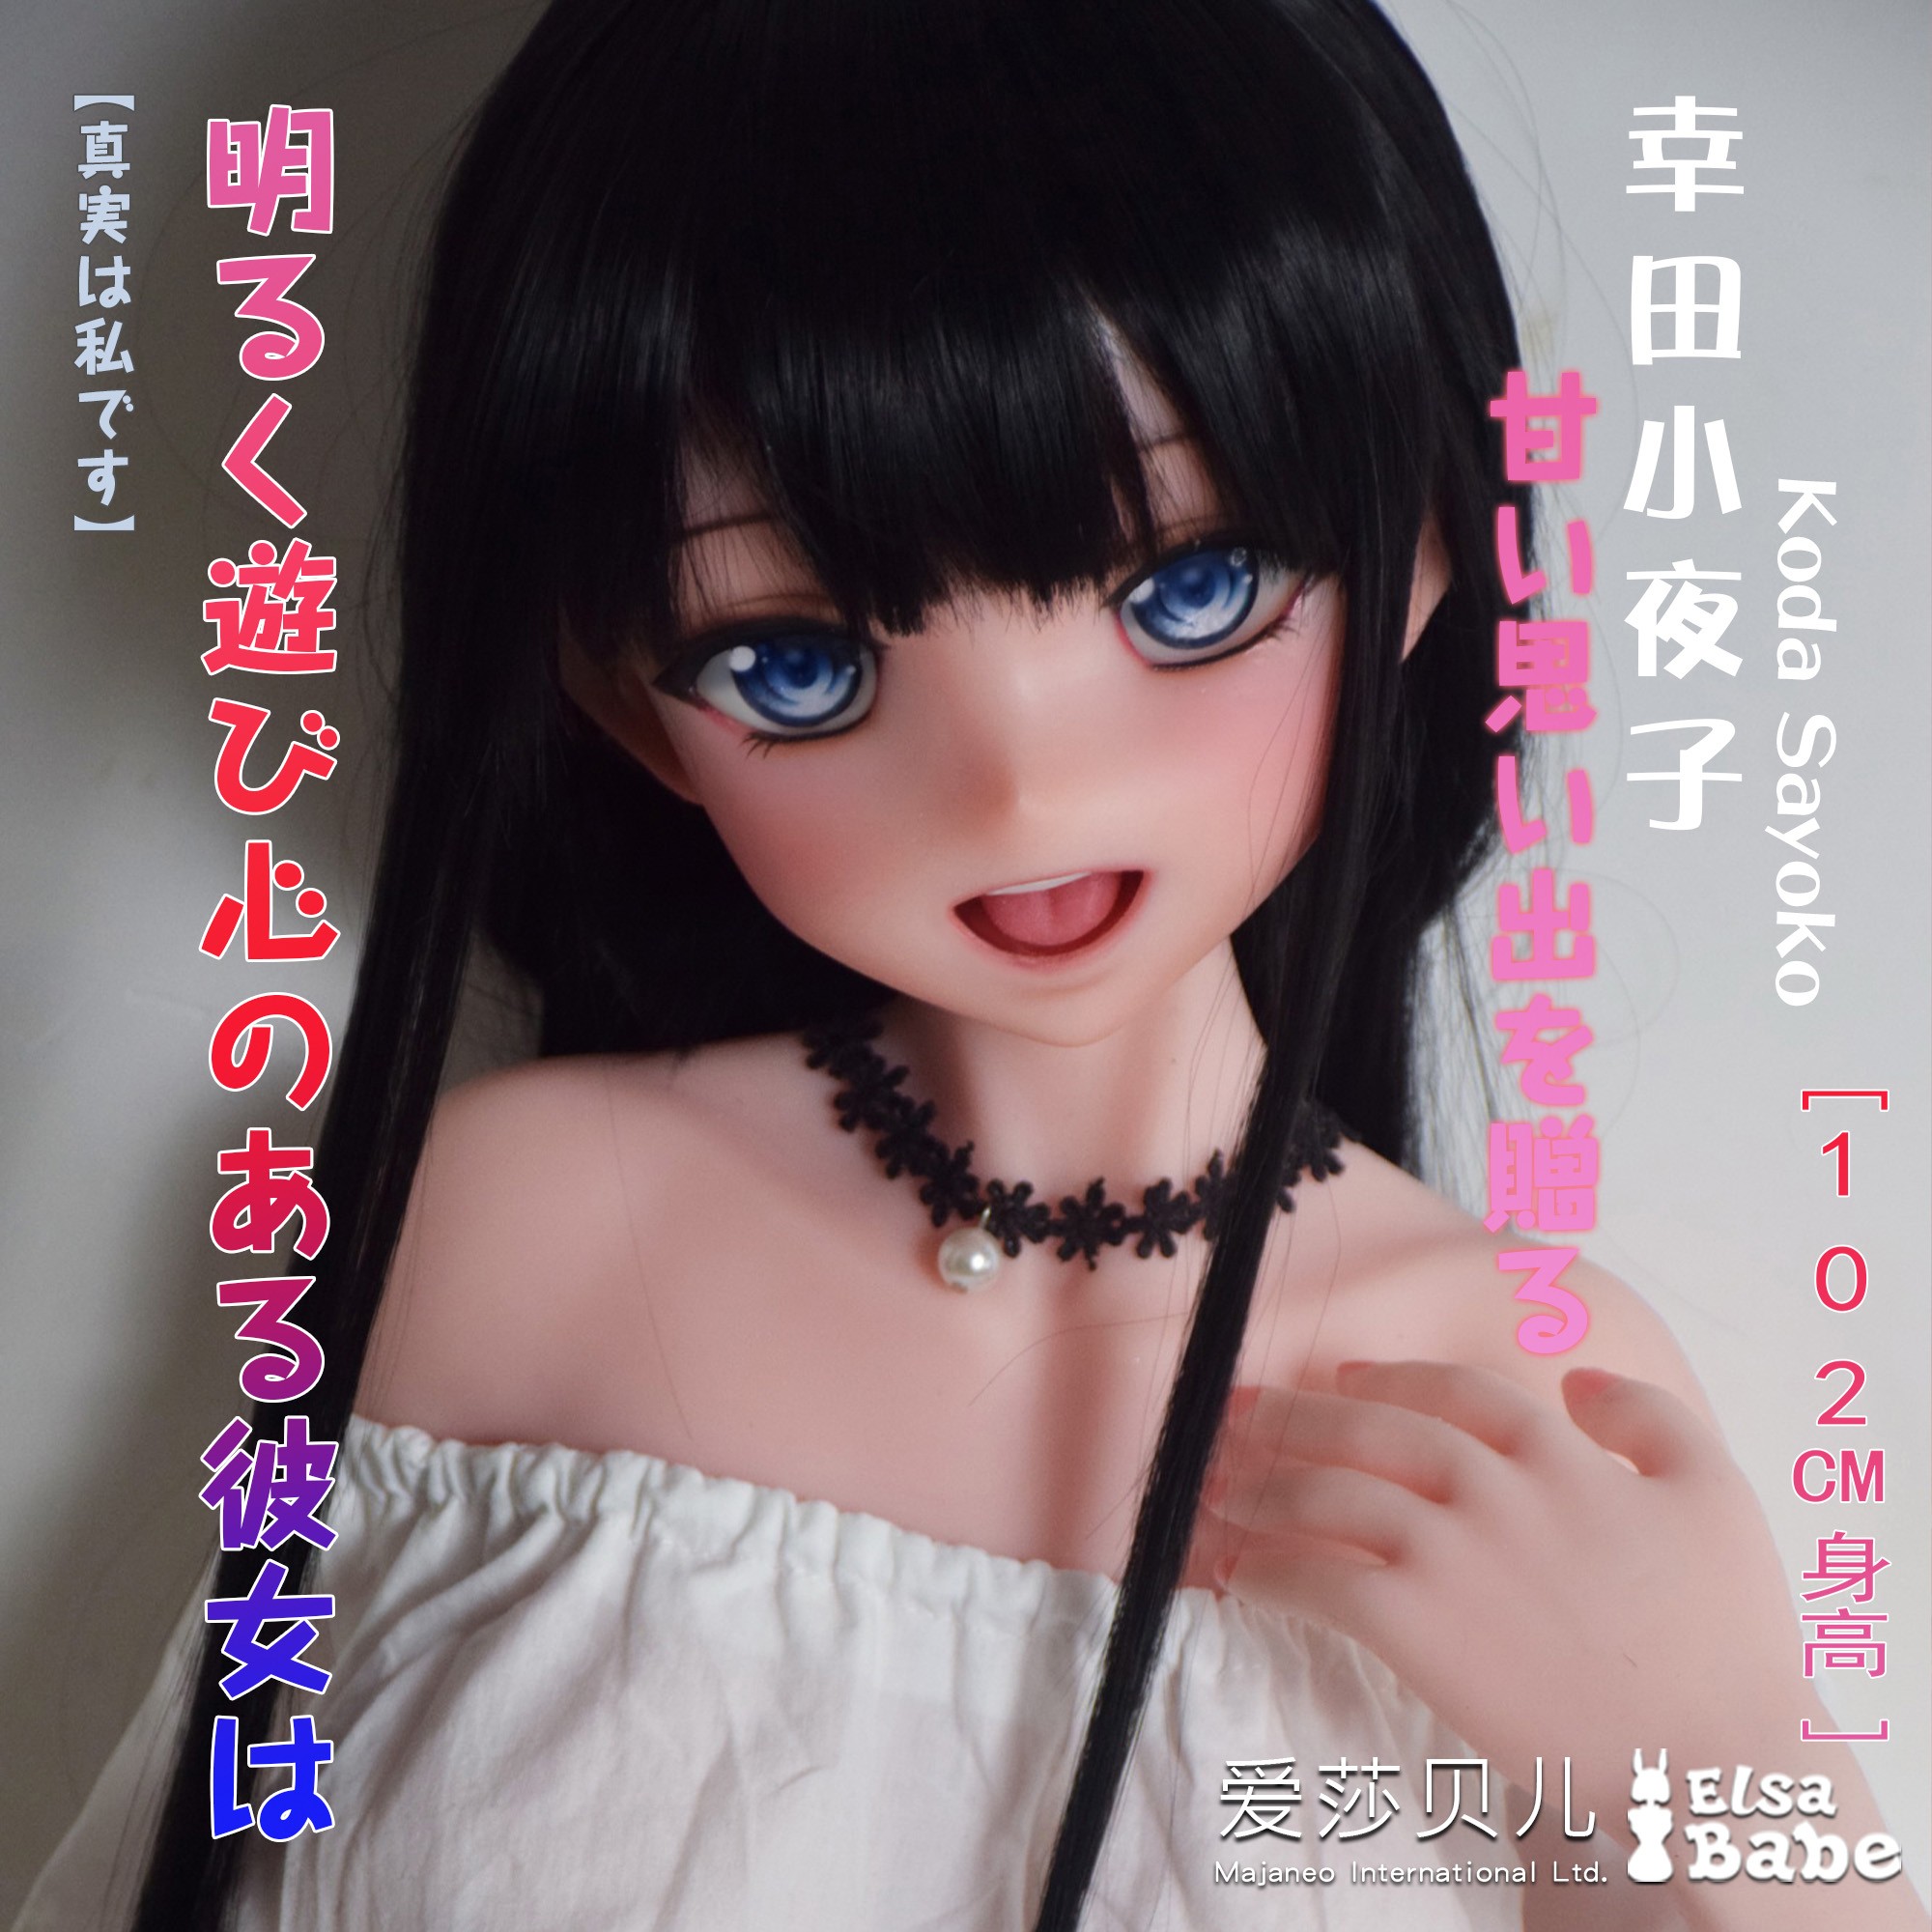 ElsaBabe 90cm 102cm Big Breasts Platinum Silicone Sex Doll Anime Figure Body Real Solid Erotic Toy with Metal Skeleton, Koda Sayoko